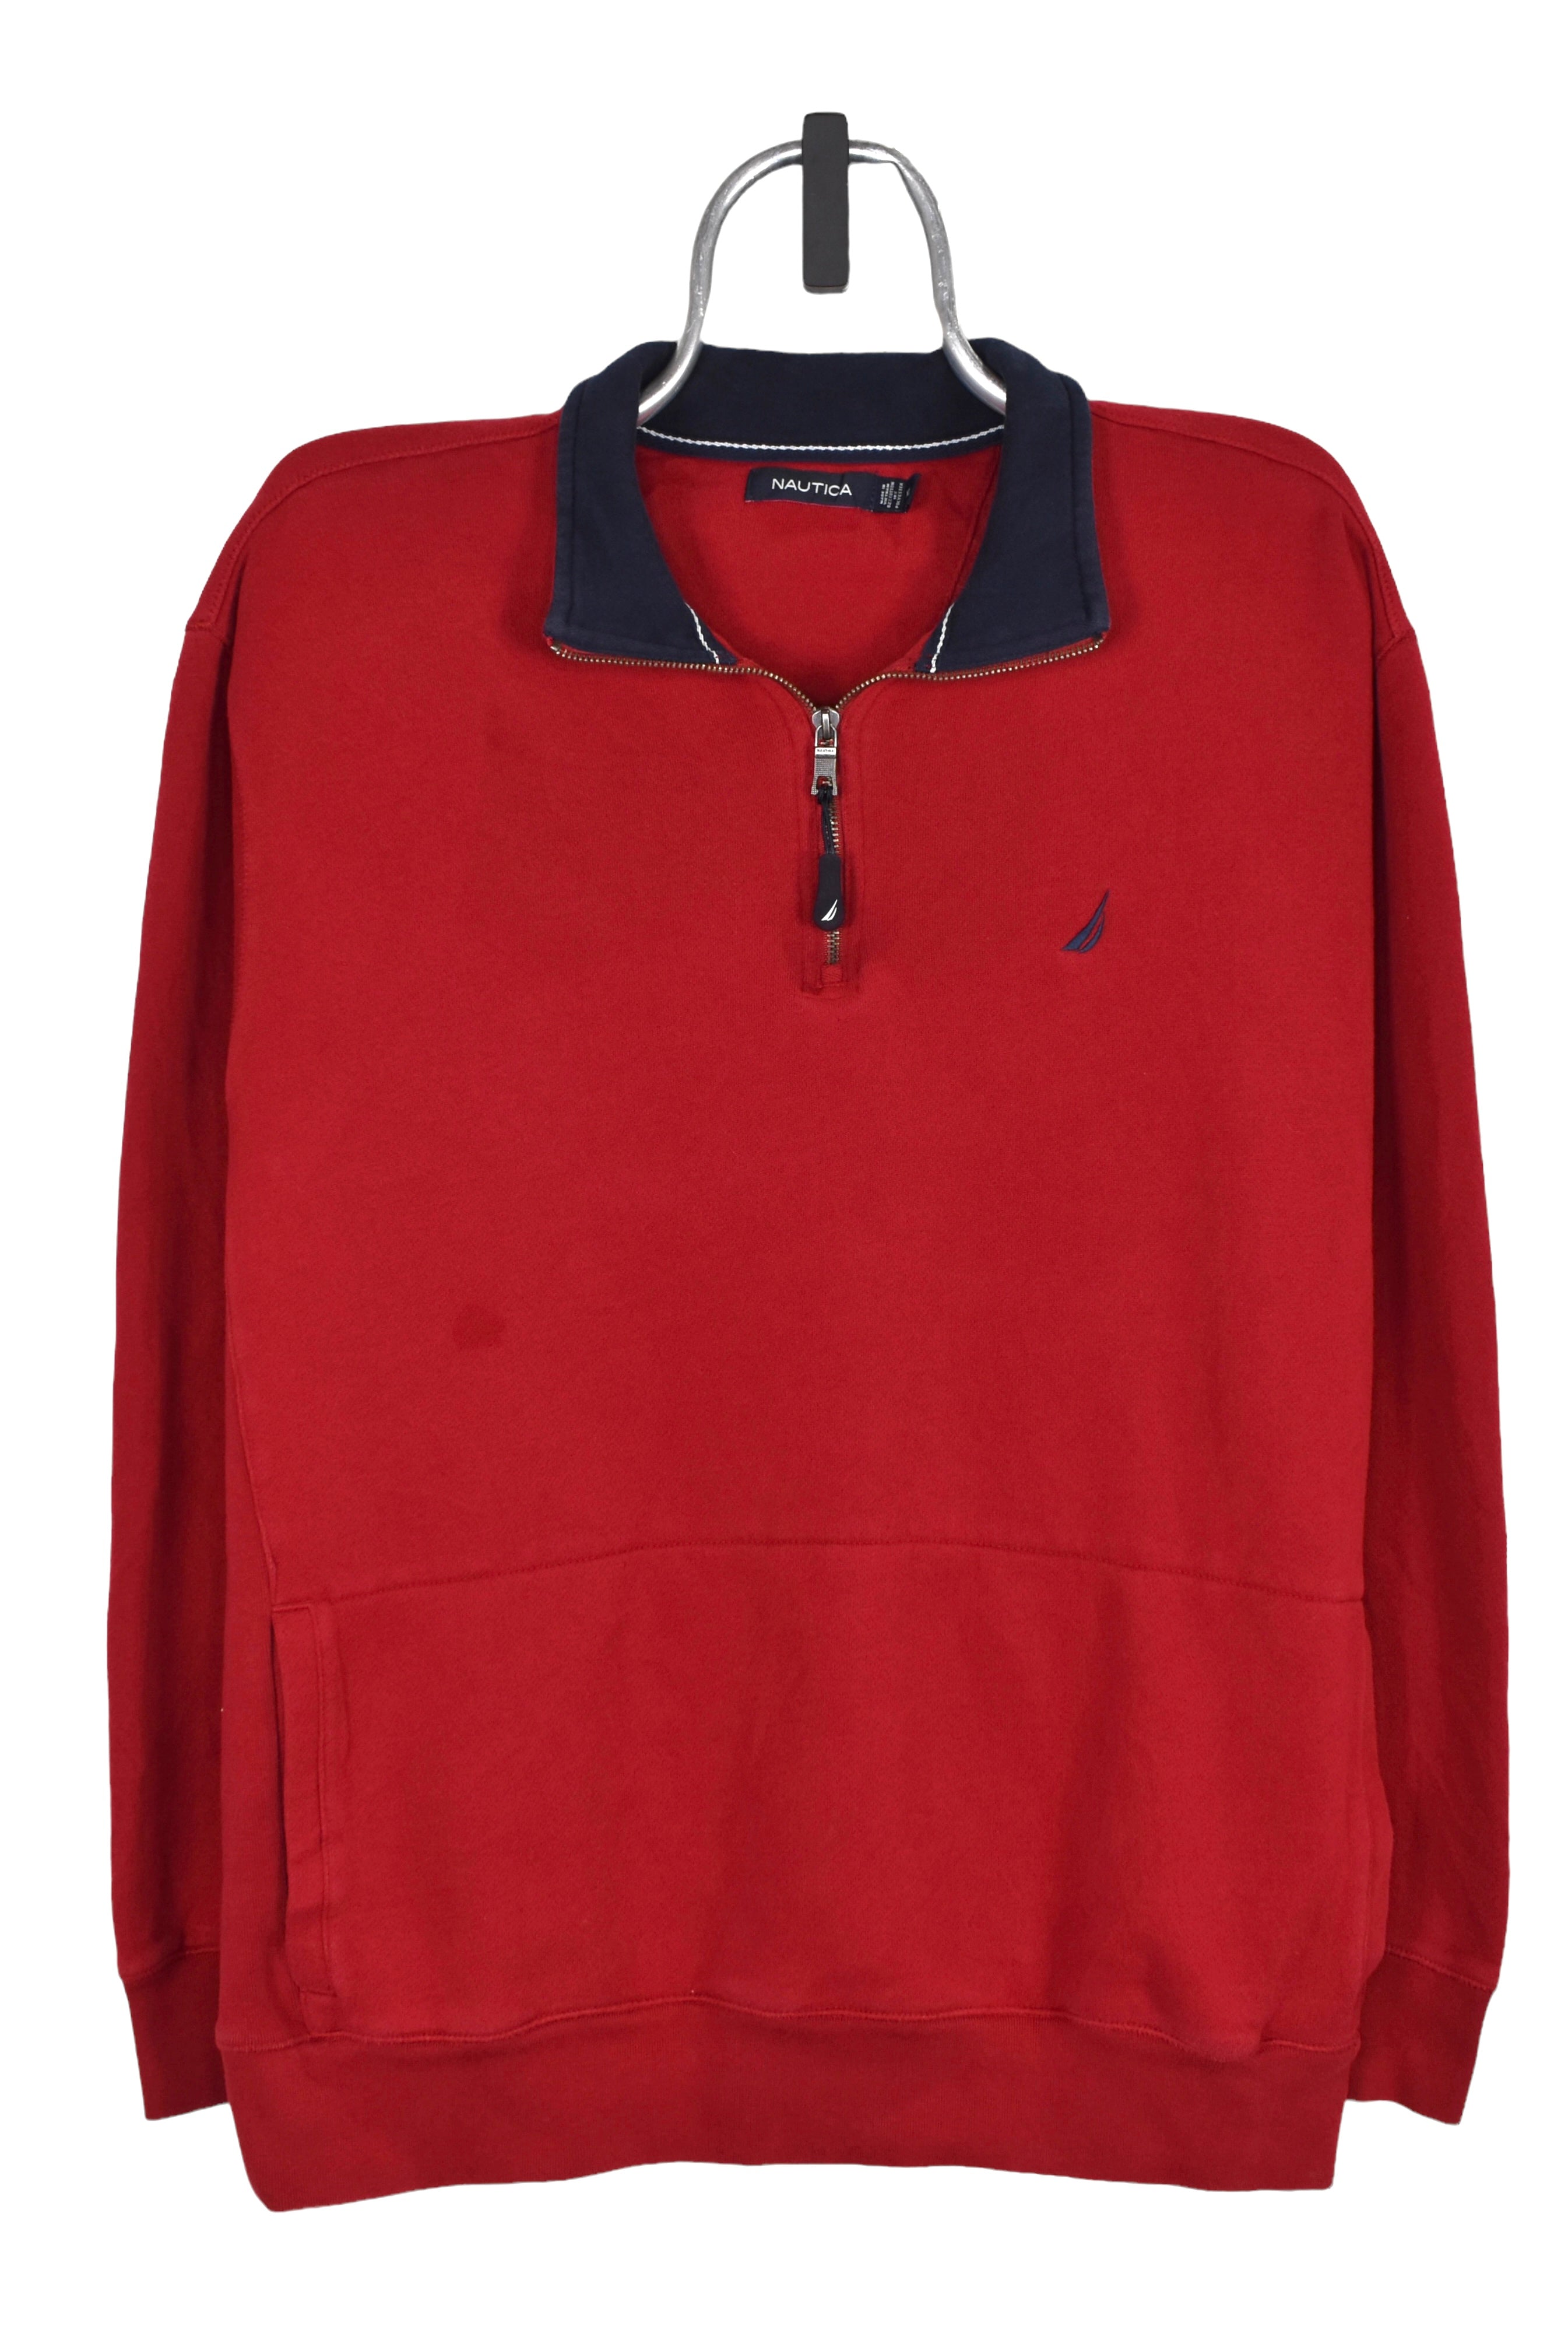 Vintage Nautica 1/4 zip (XL), red embroidered sweatshirt